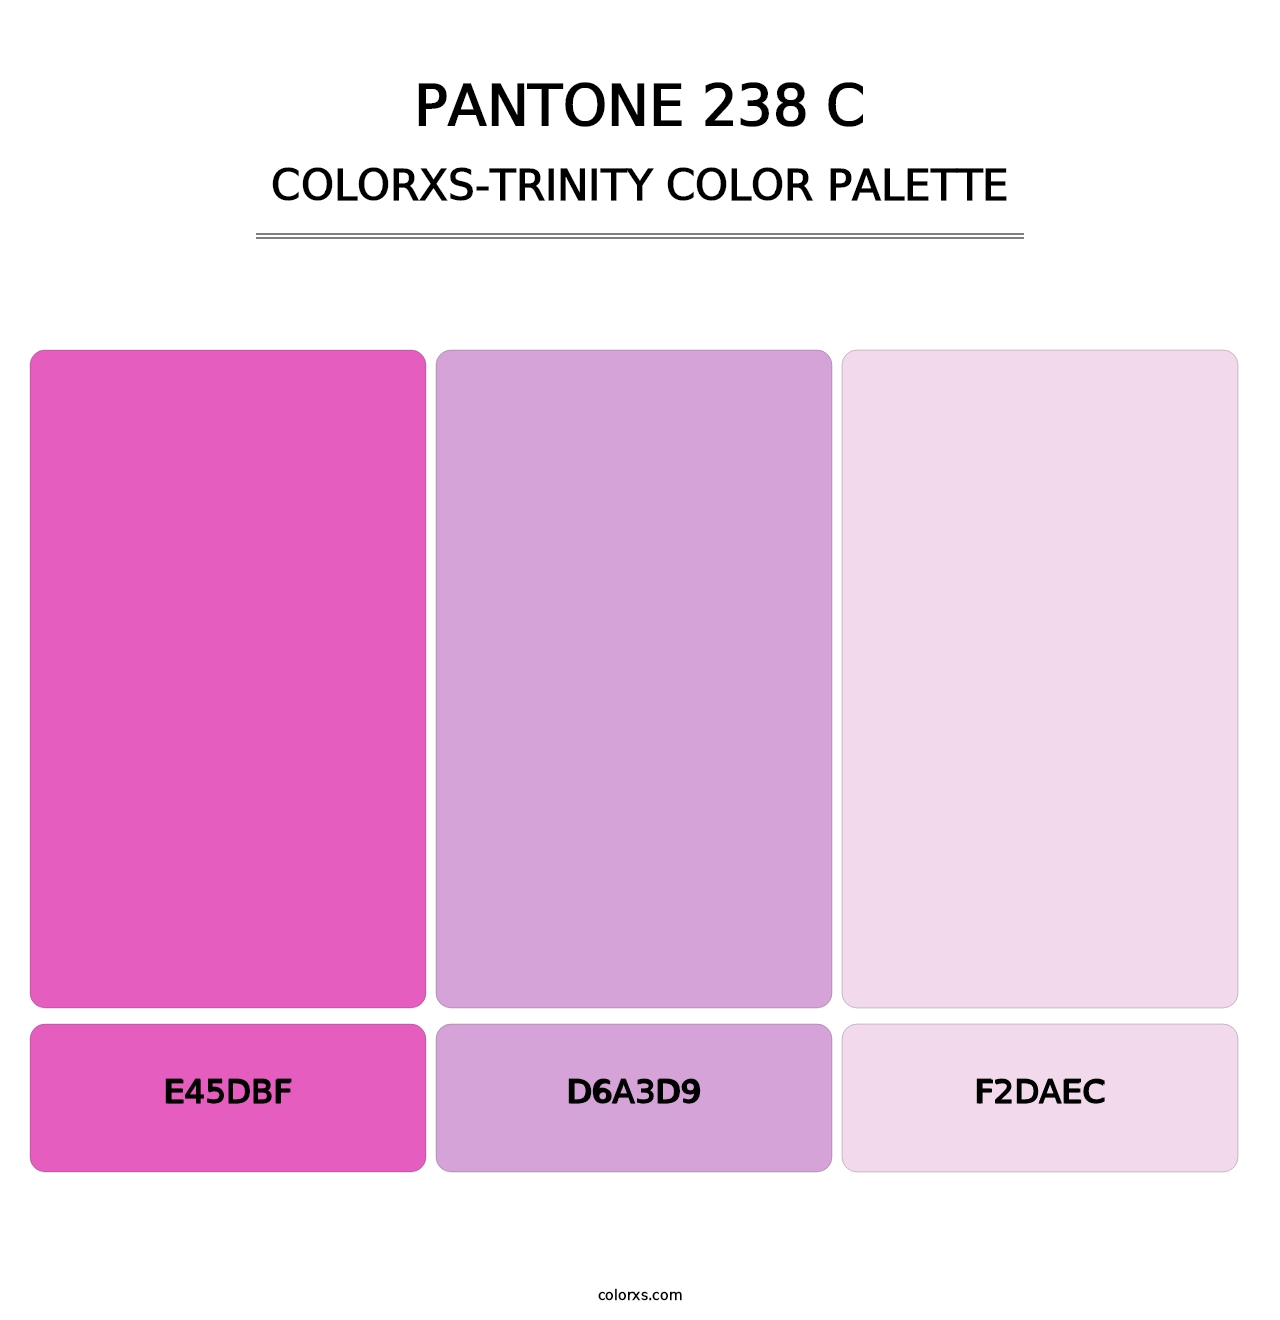 PANTONE 238 C - Colorxs Trinity Palette